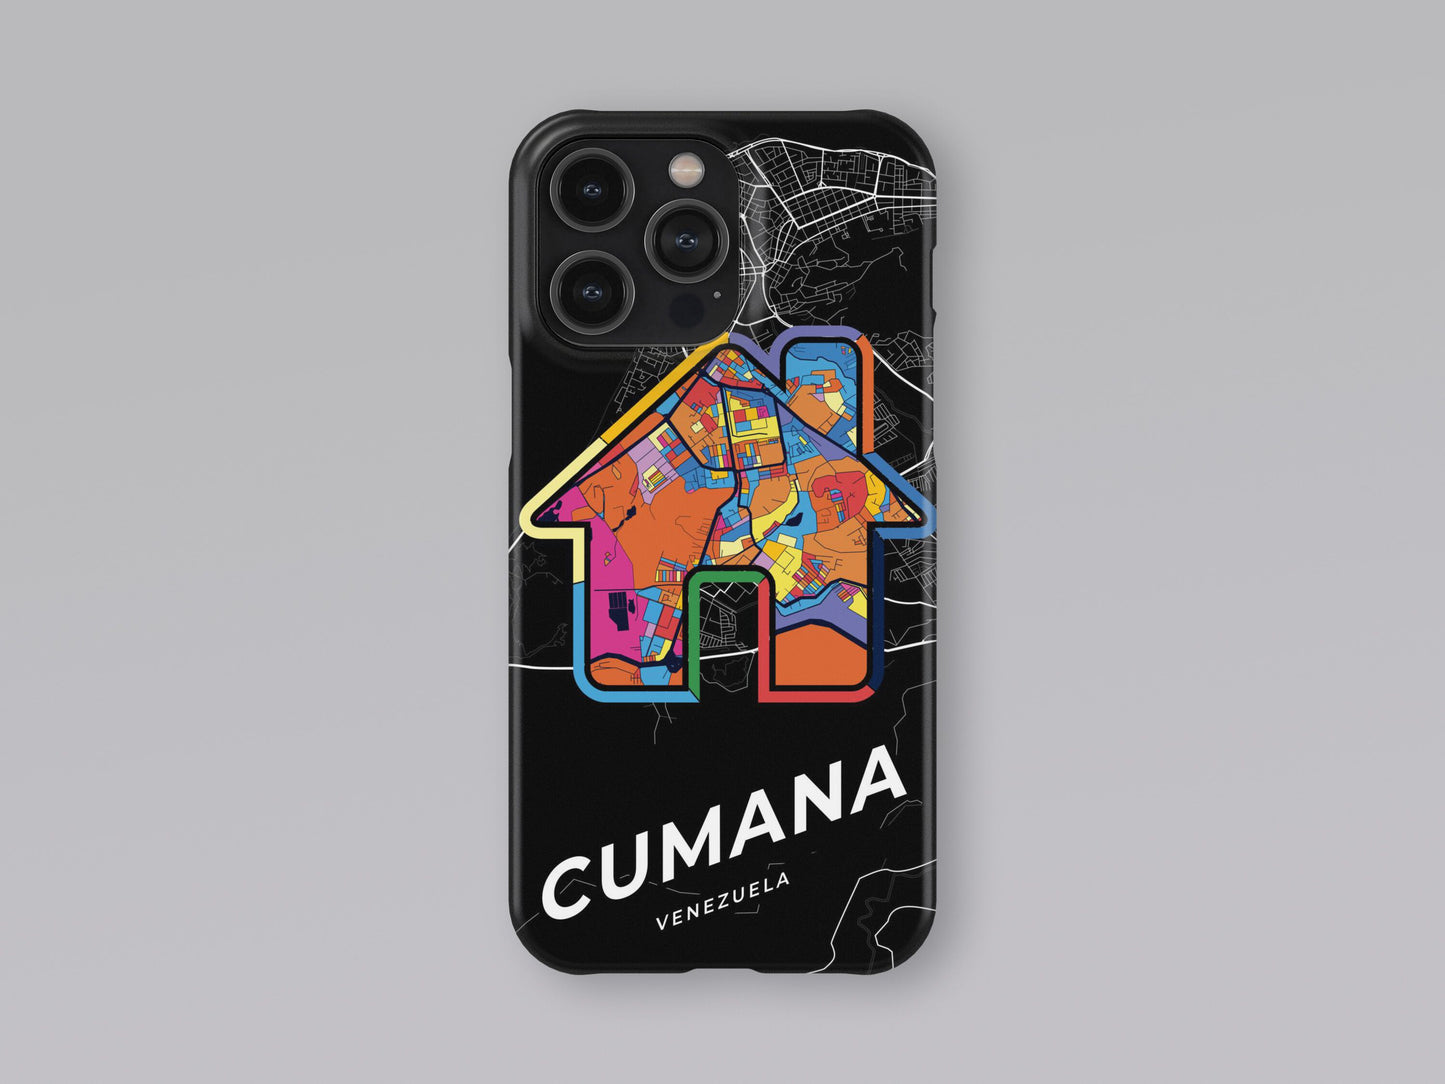 Cumana Venezuela slim phone case with colorful icon. Birthday, wedding or housewarming gift. Couple match cases. 3